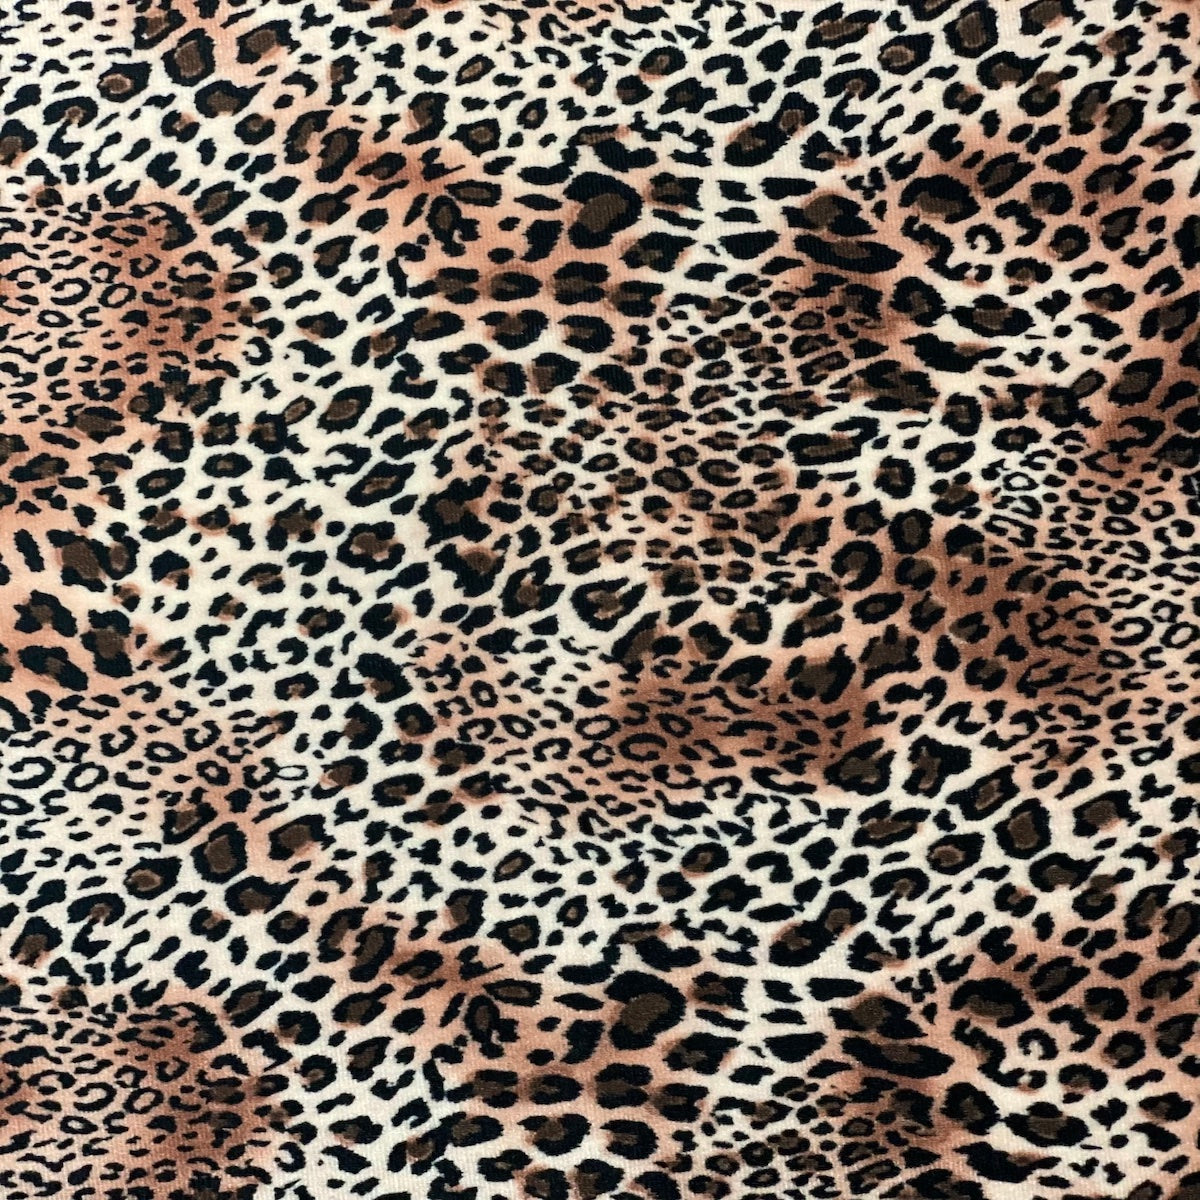 African Cheetah Print Stretch Velvet Fabric - Fashion Fabrics Los Angeles 